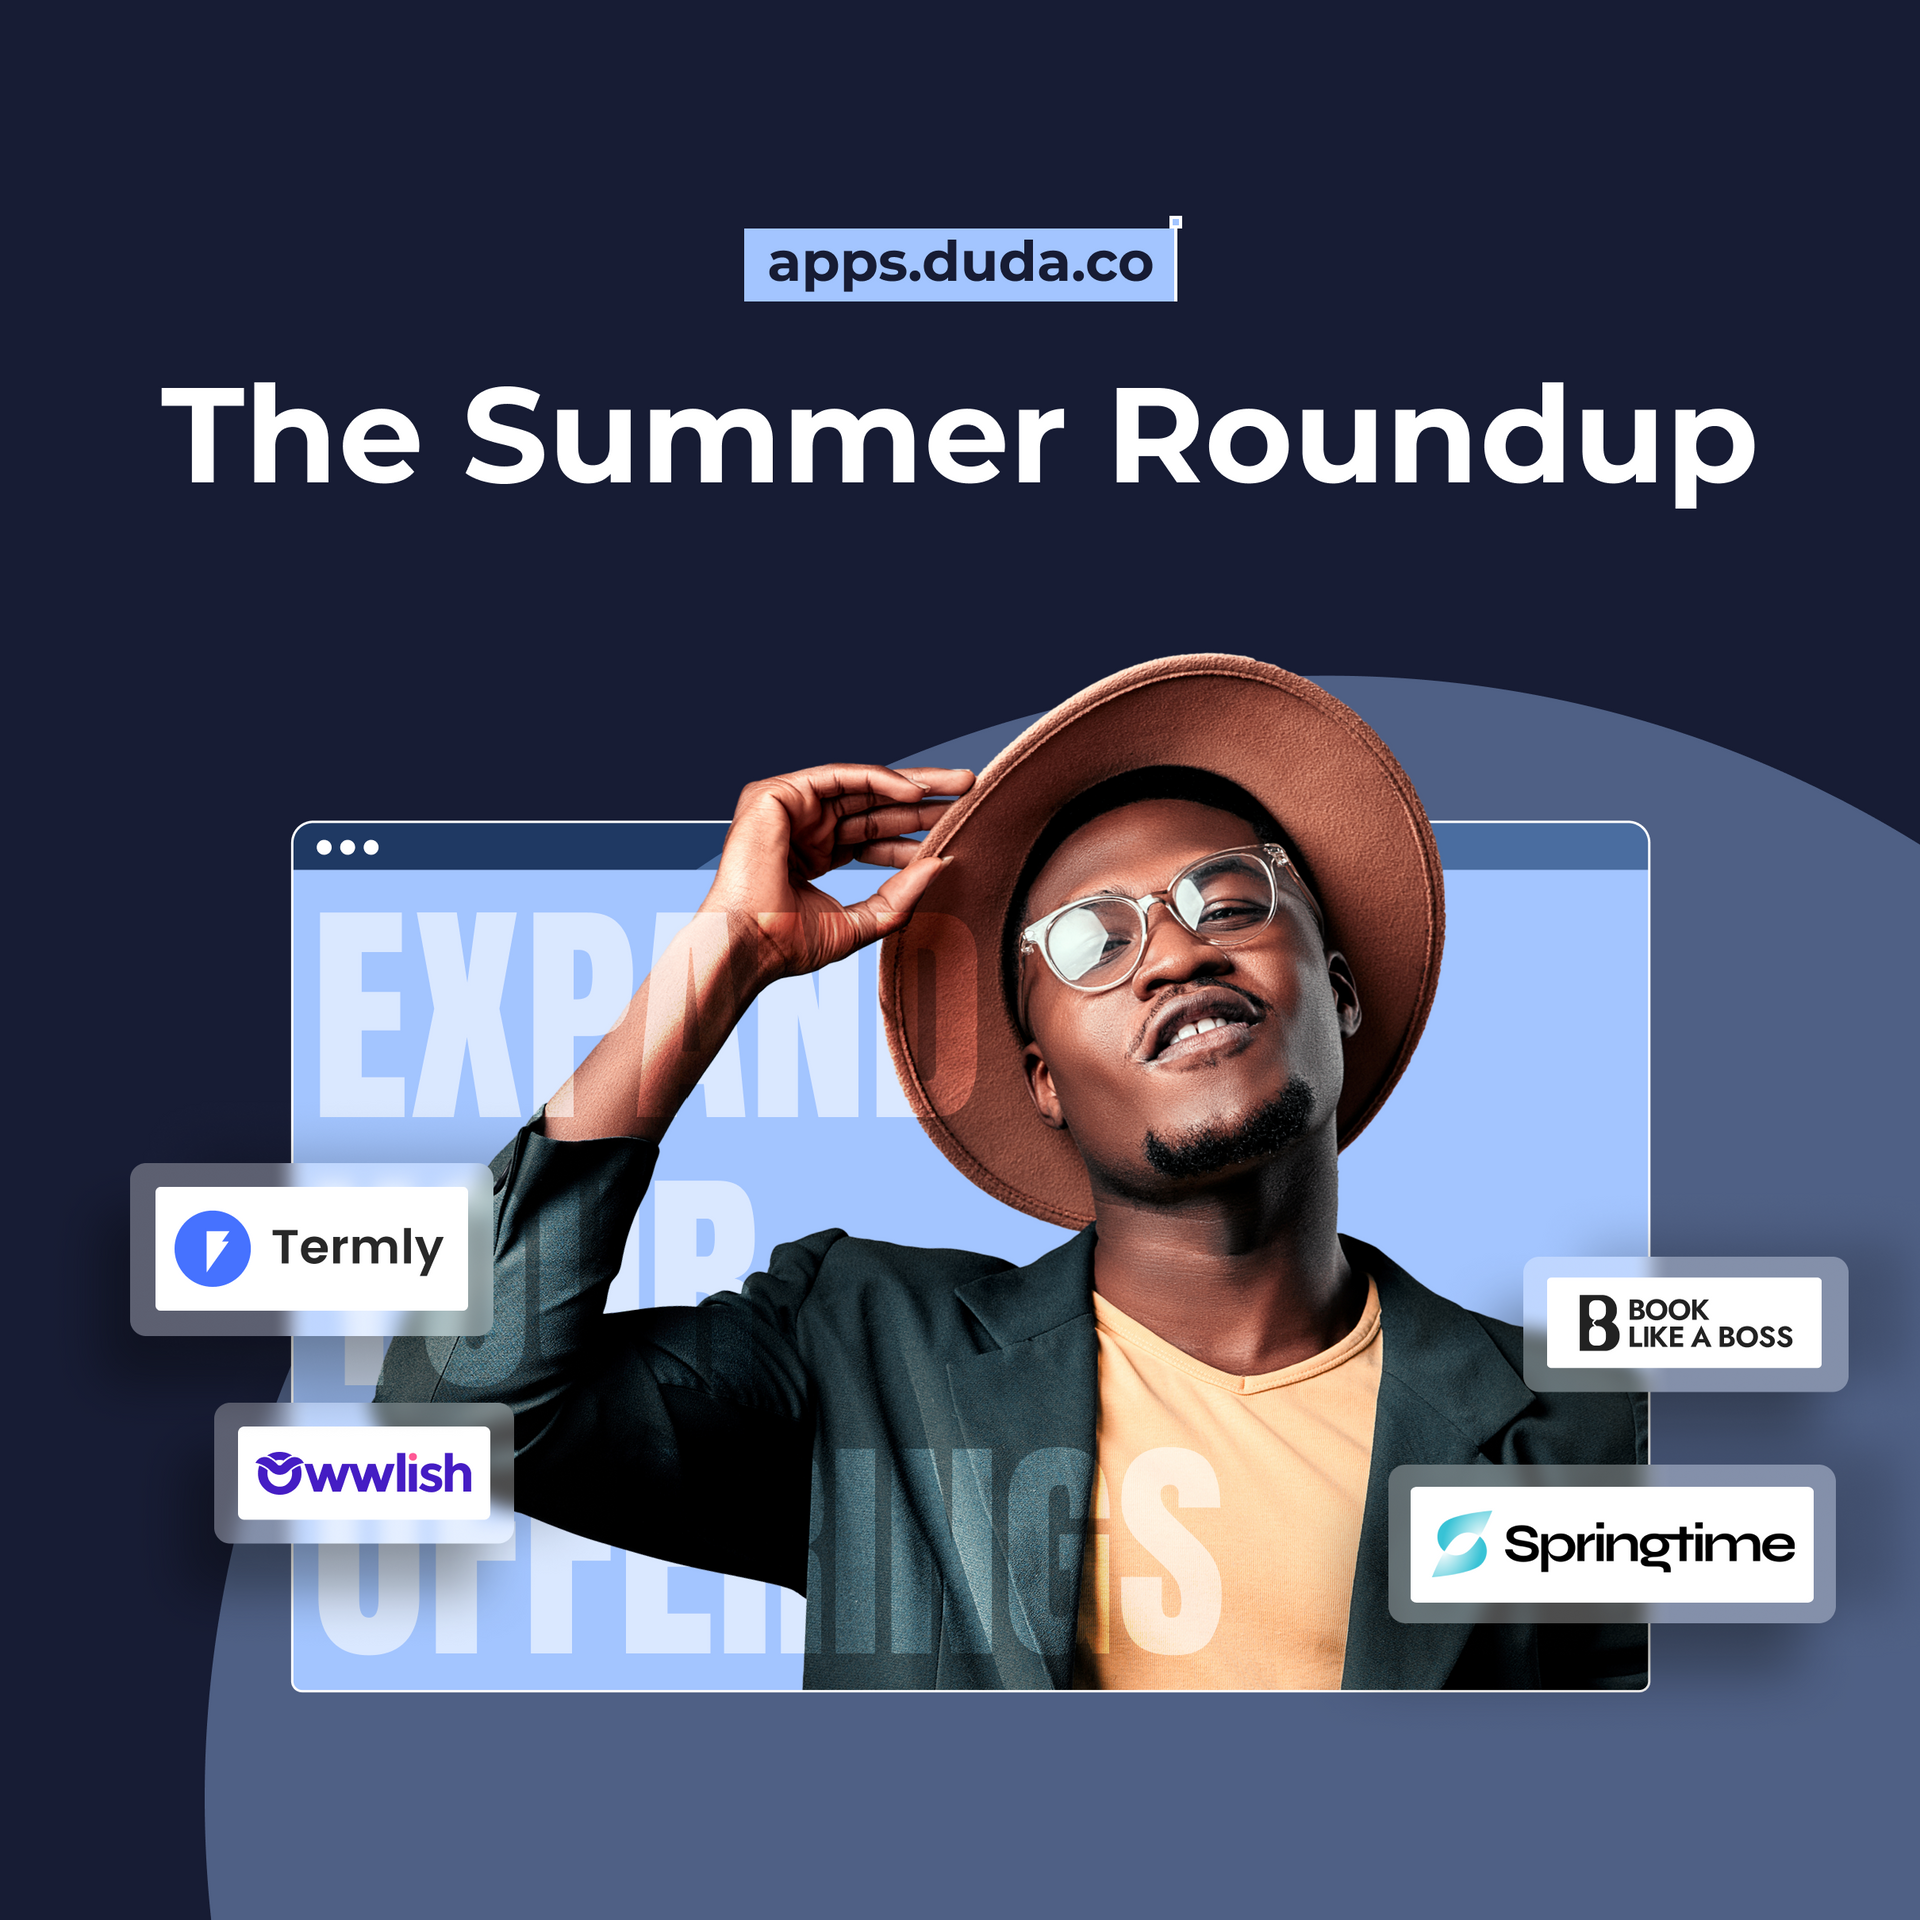 New Duda App Store Releases - Summer Roundup